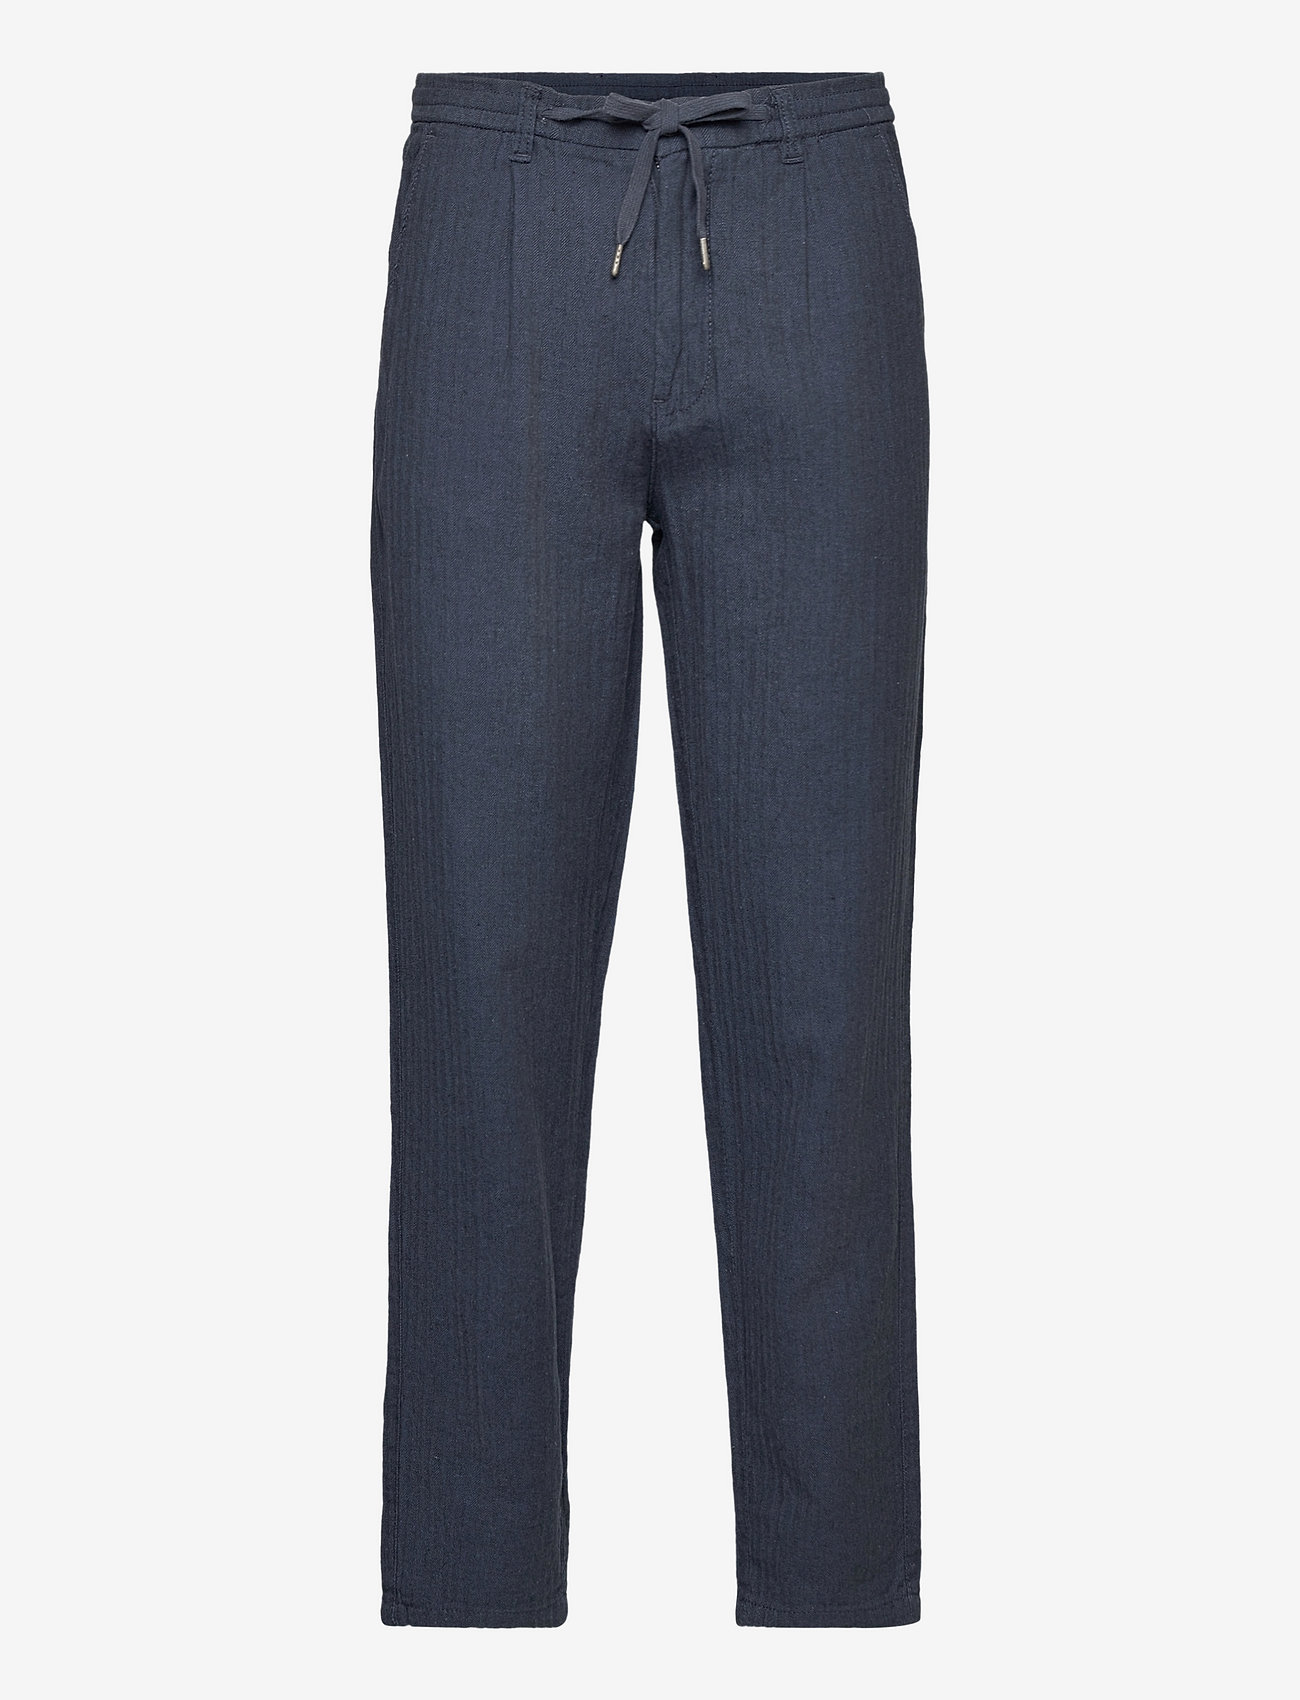 Lindbergh - Linen blend herringbone pants - linen trousers - navy - 0